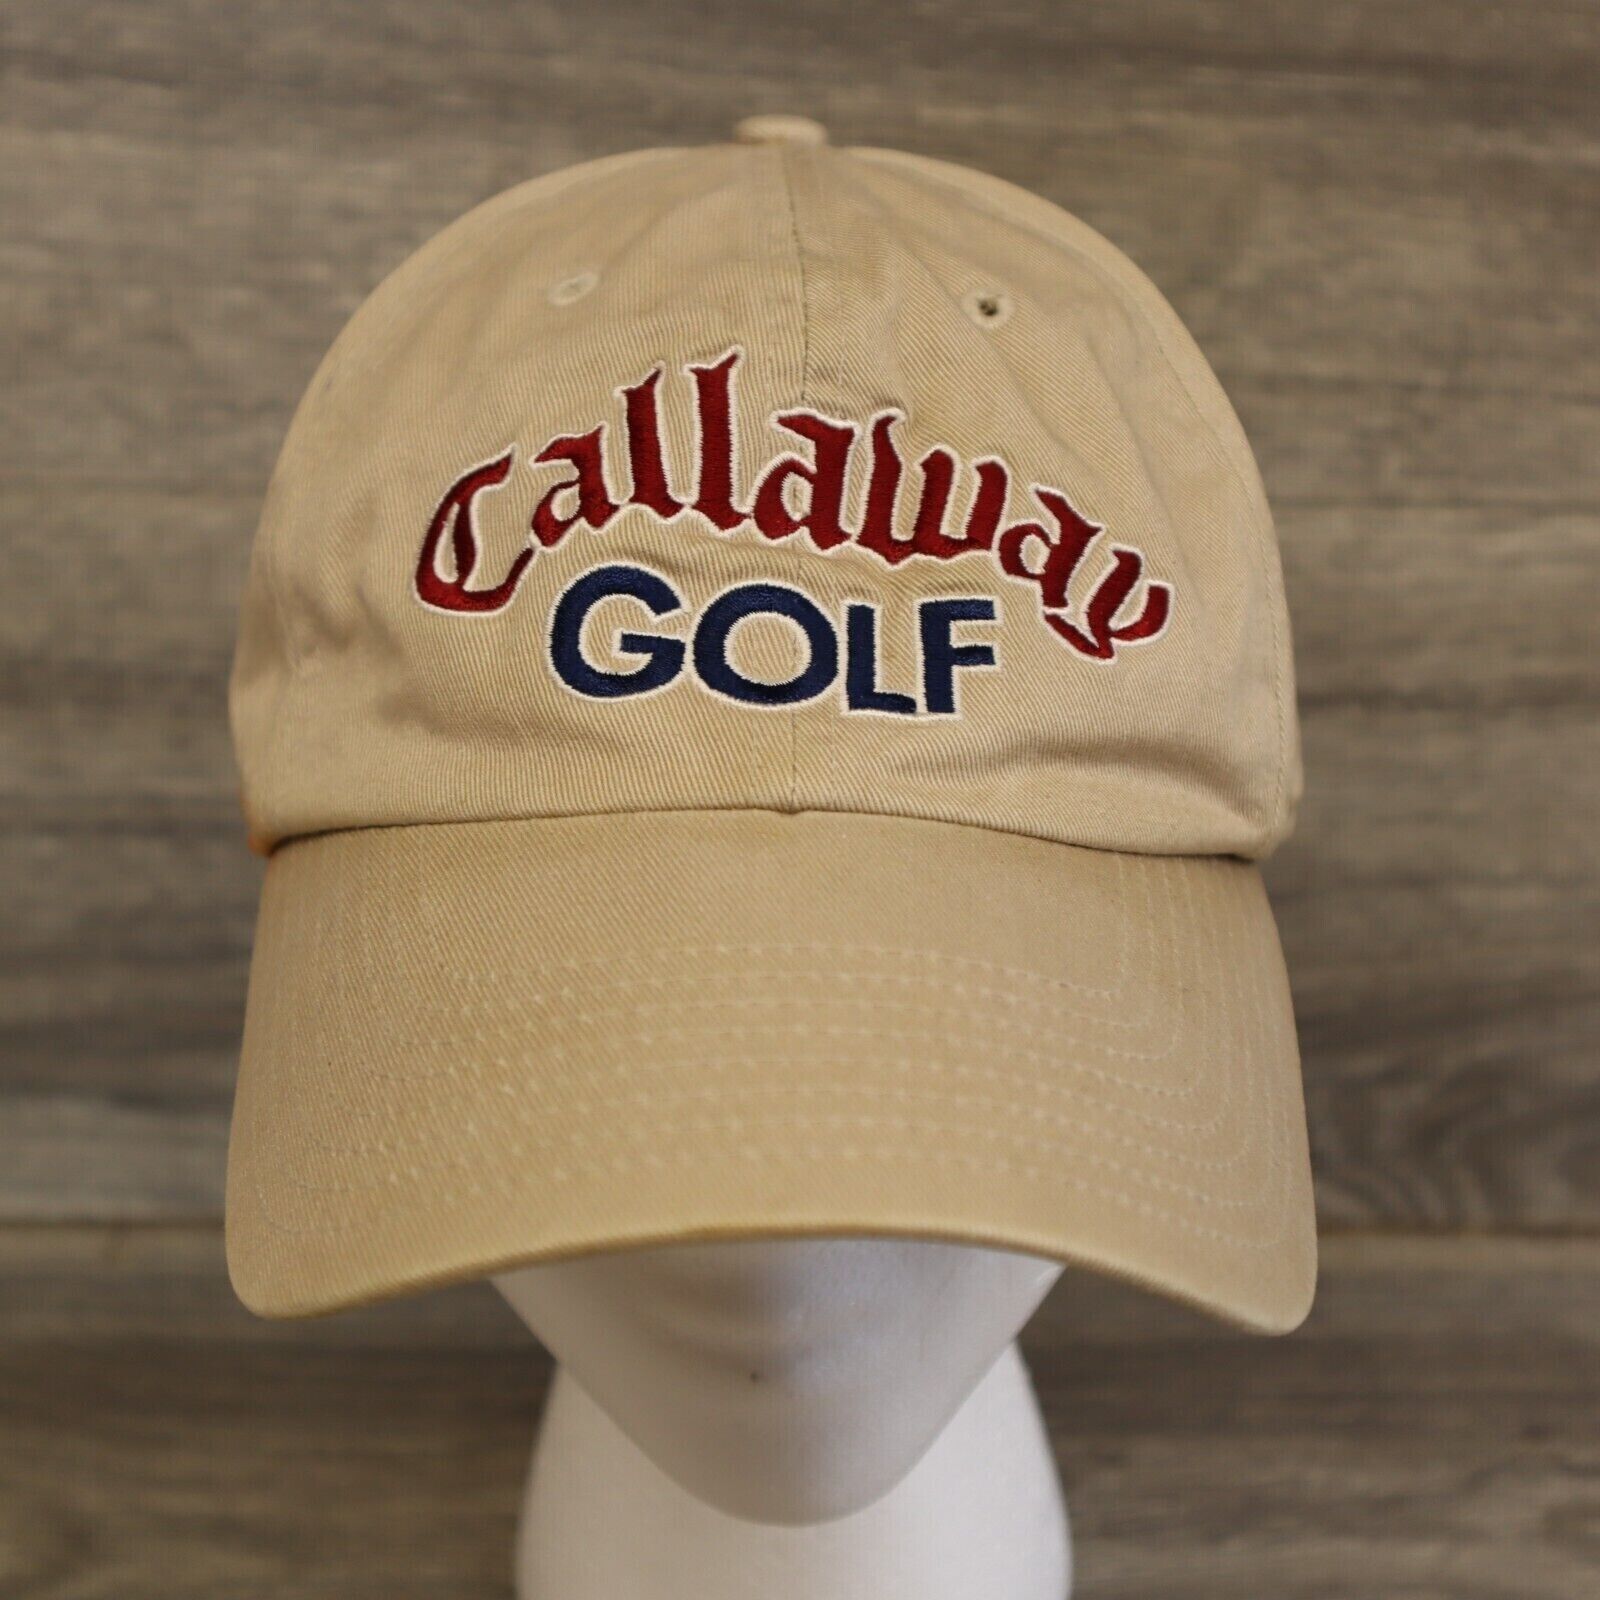 Callaway Golf Strapback Adjustable Baseball Cap Hat Beige - $21.76